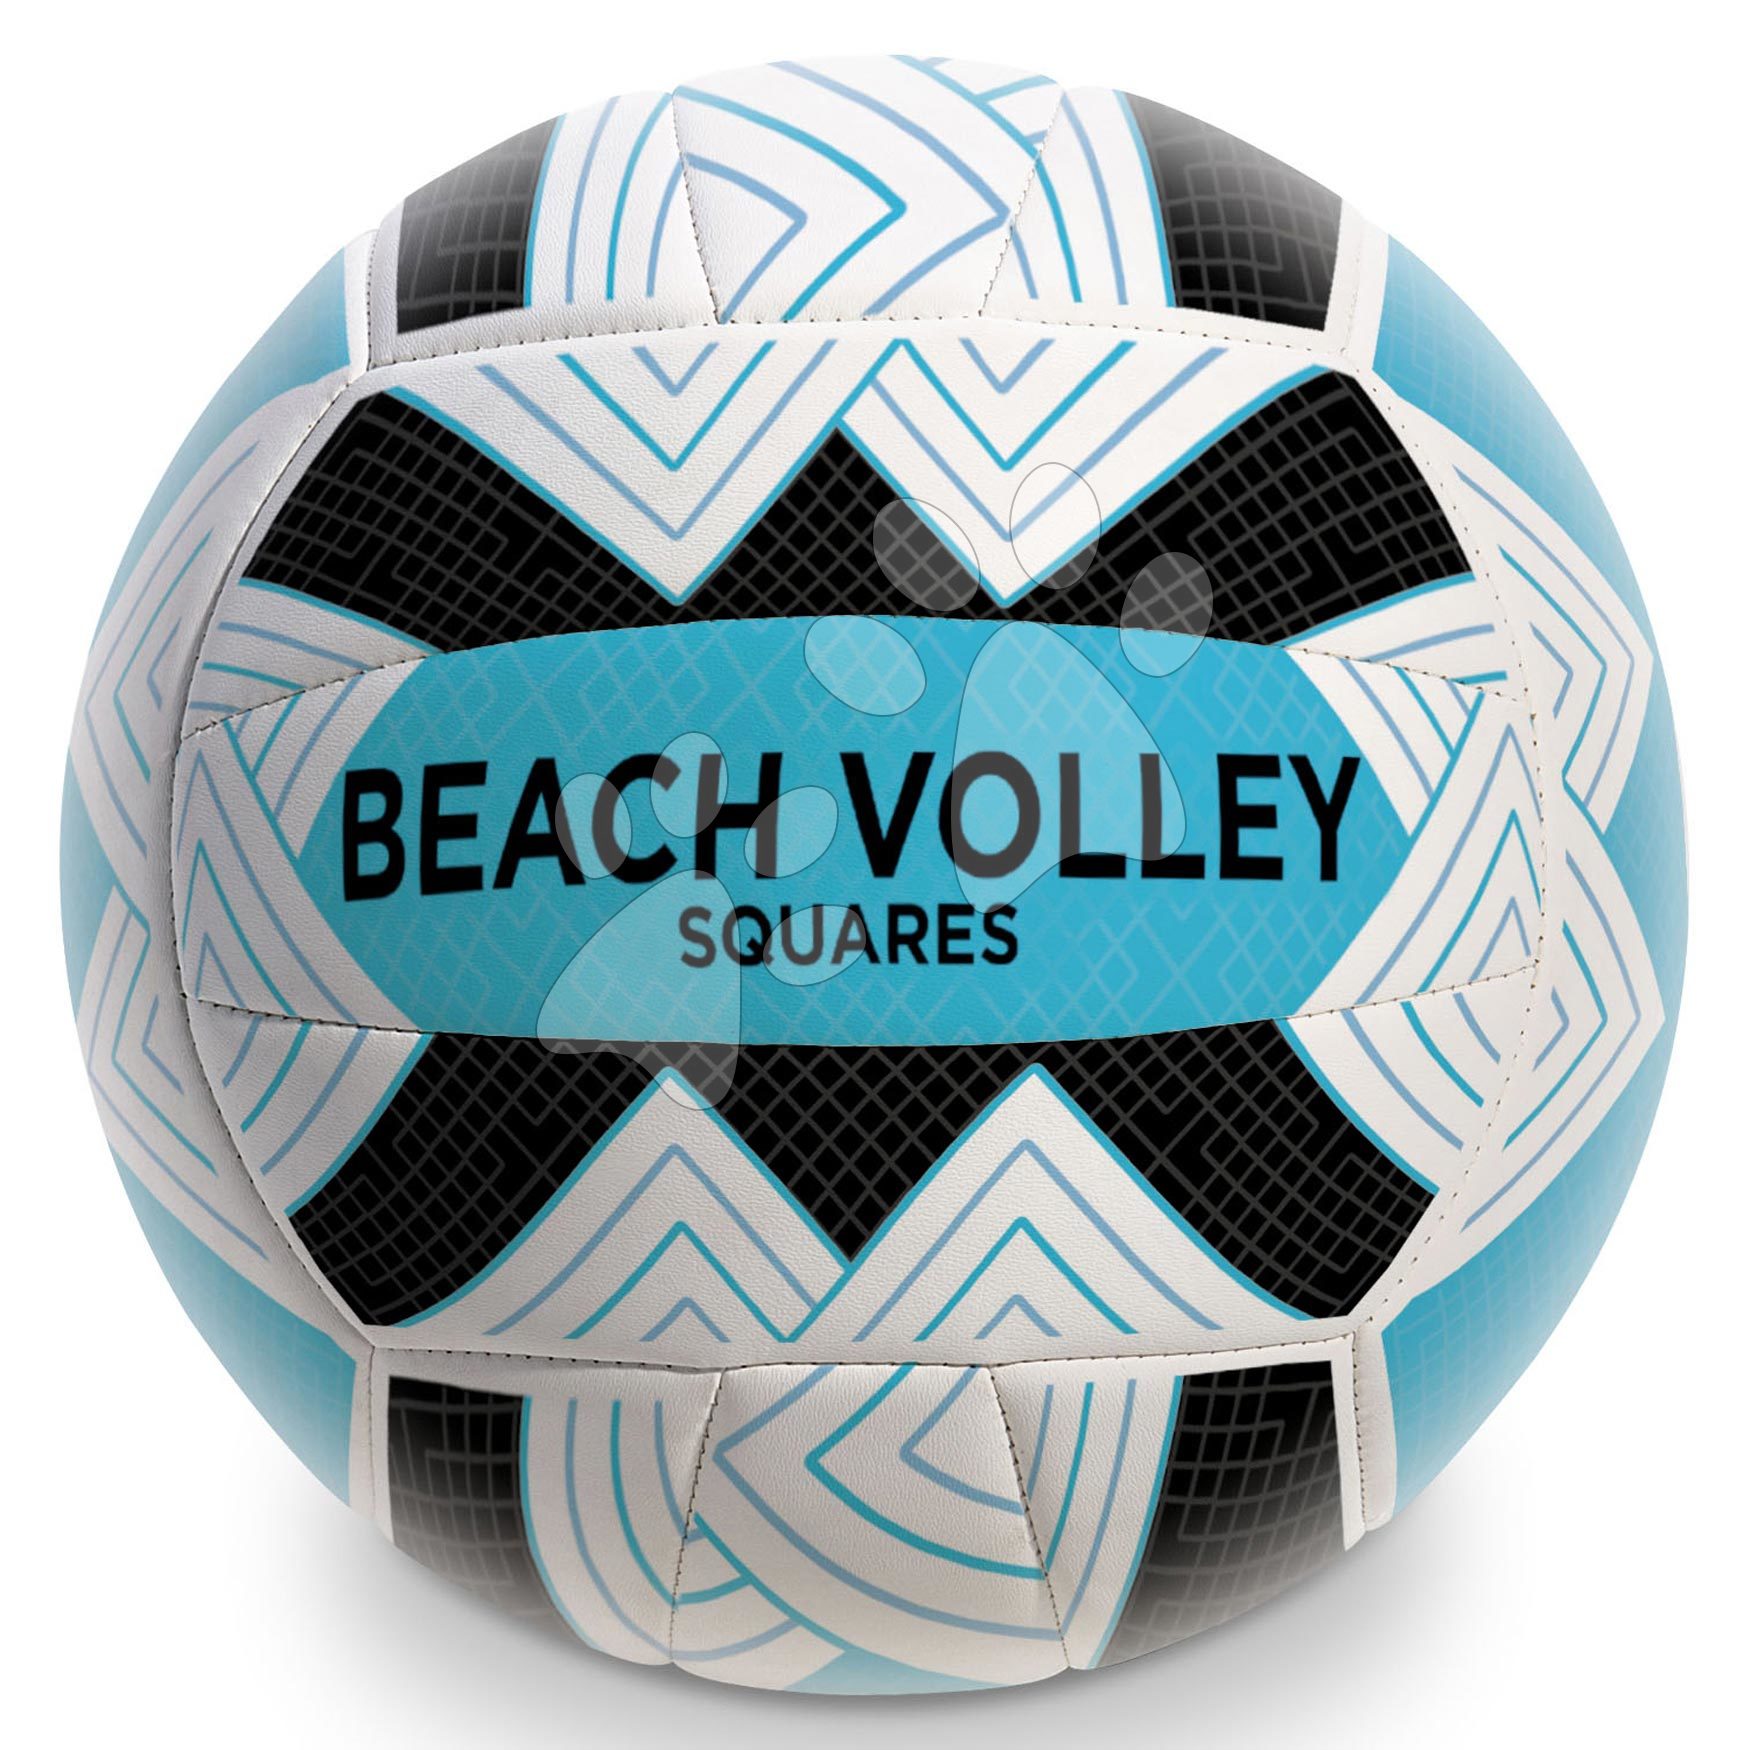 Röplabda varrott Beach Volley Squares Mondo mérete 5 súlya  270 g